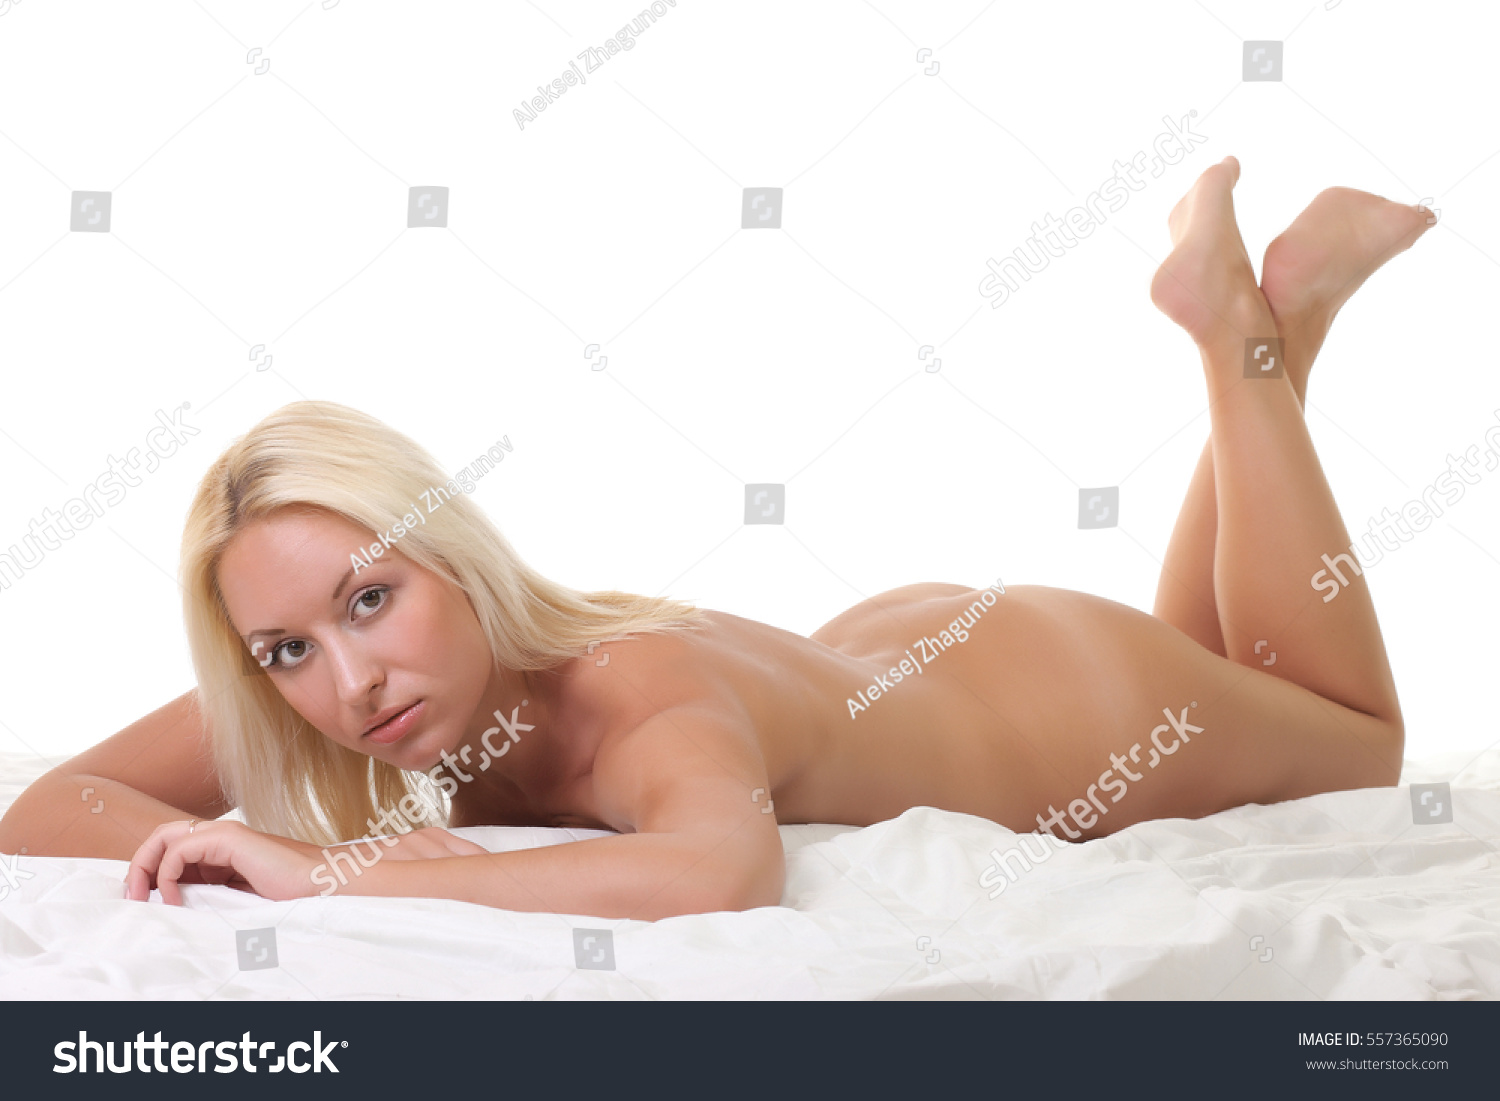 Hot girls buttstock nude